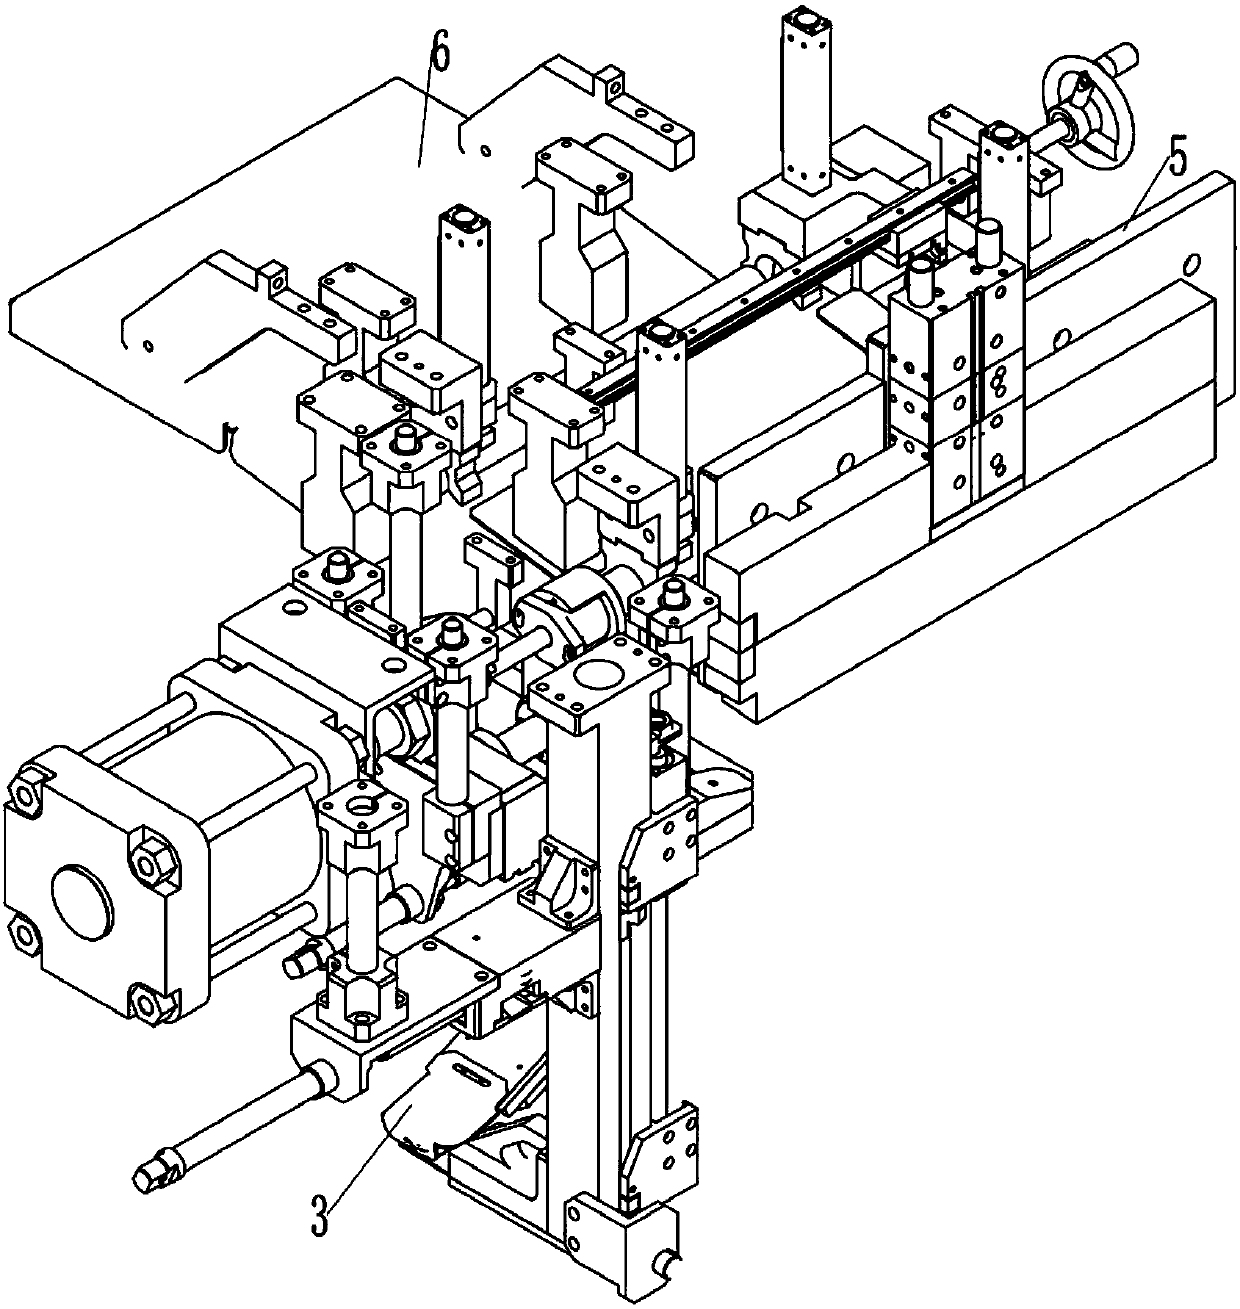 Pipe barrel and bottom valve assembling machine